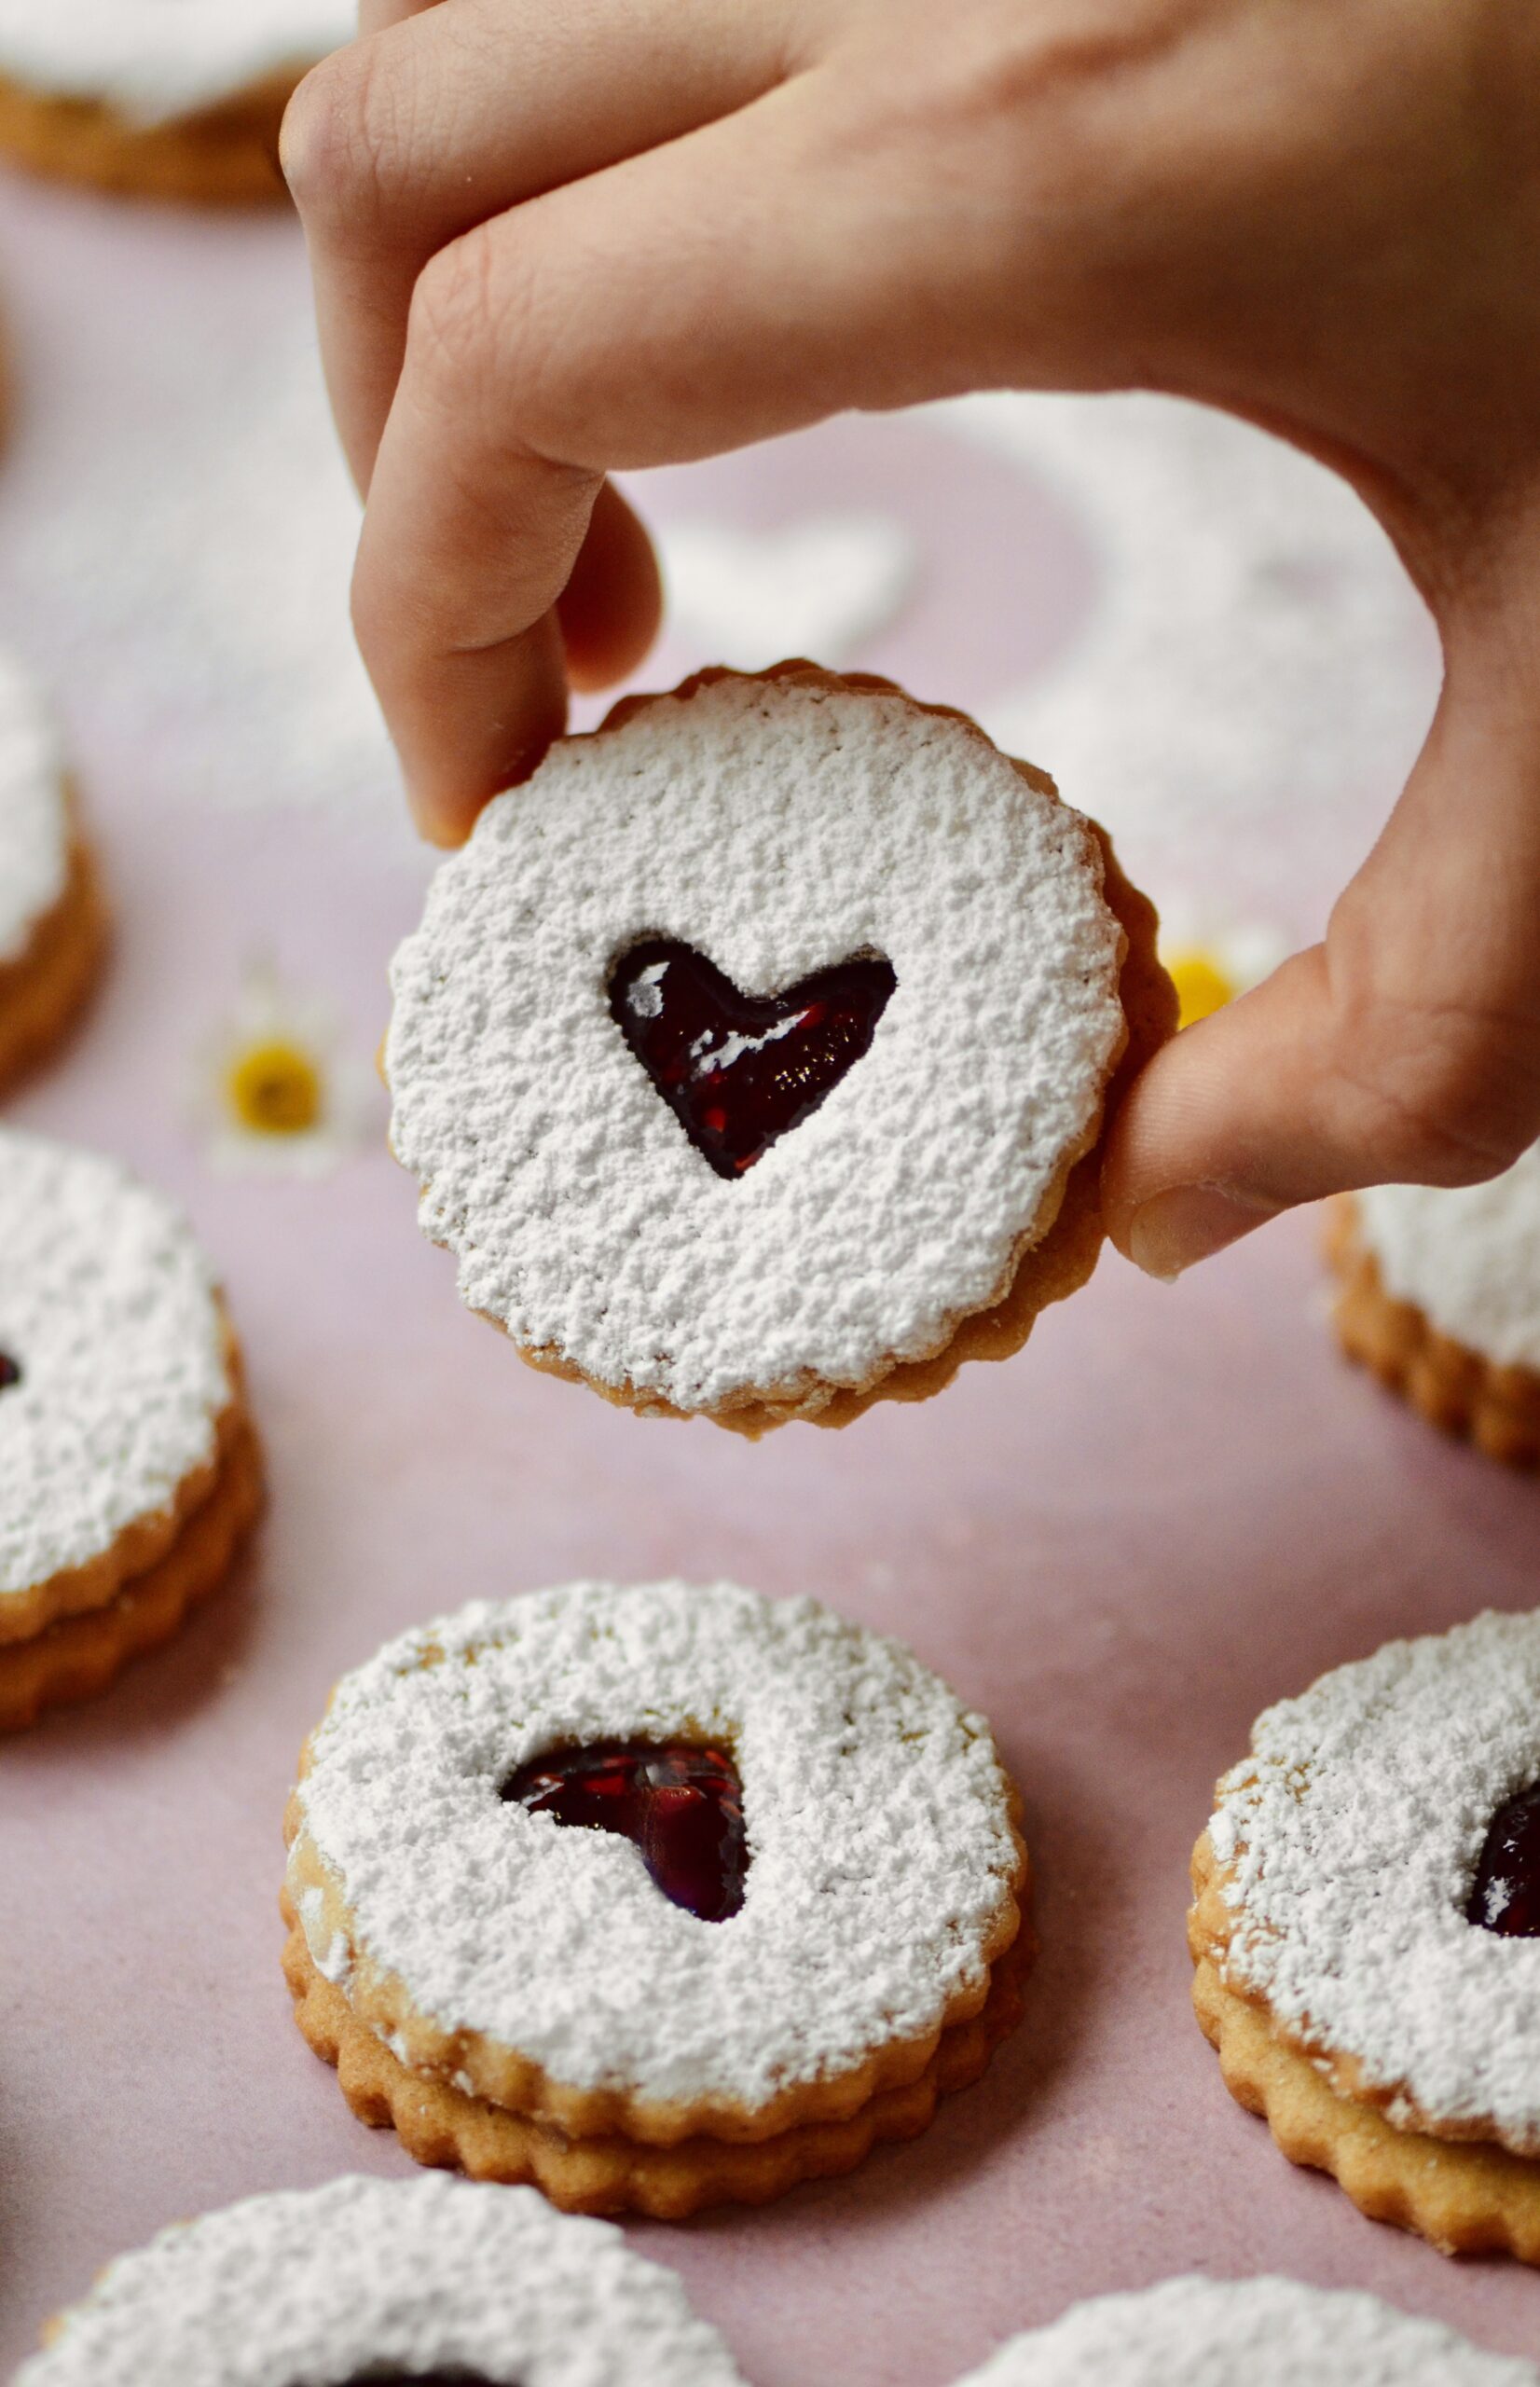 Raspberry Almond Linzer Cookies.